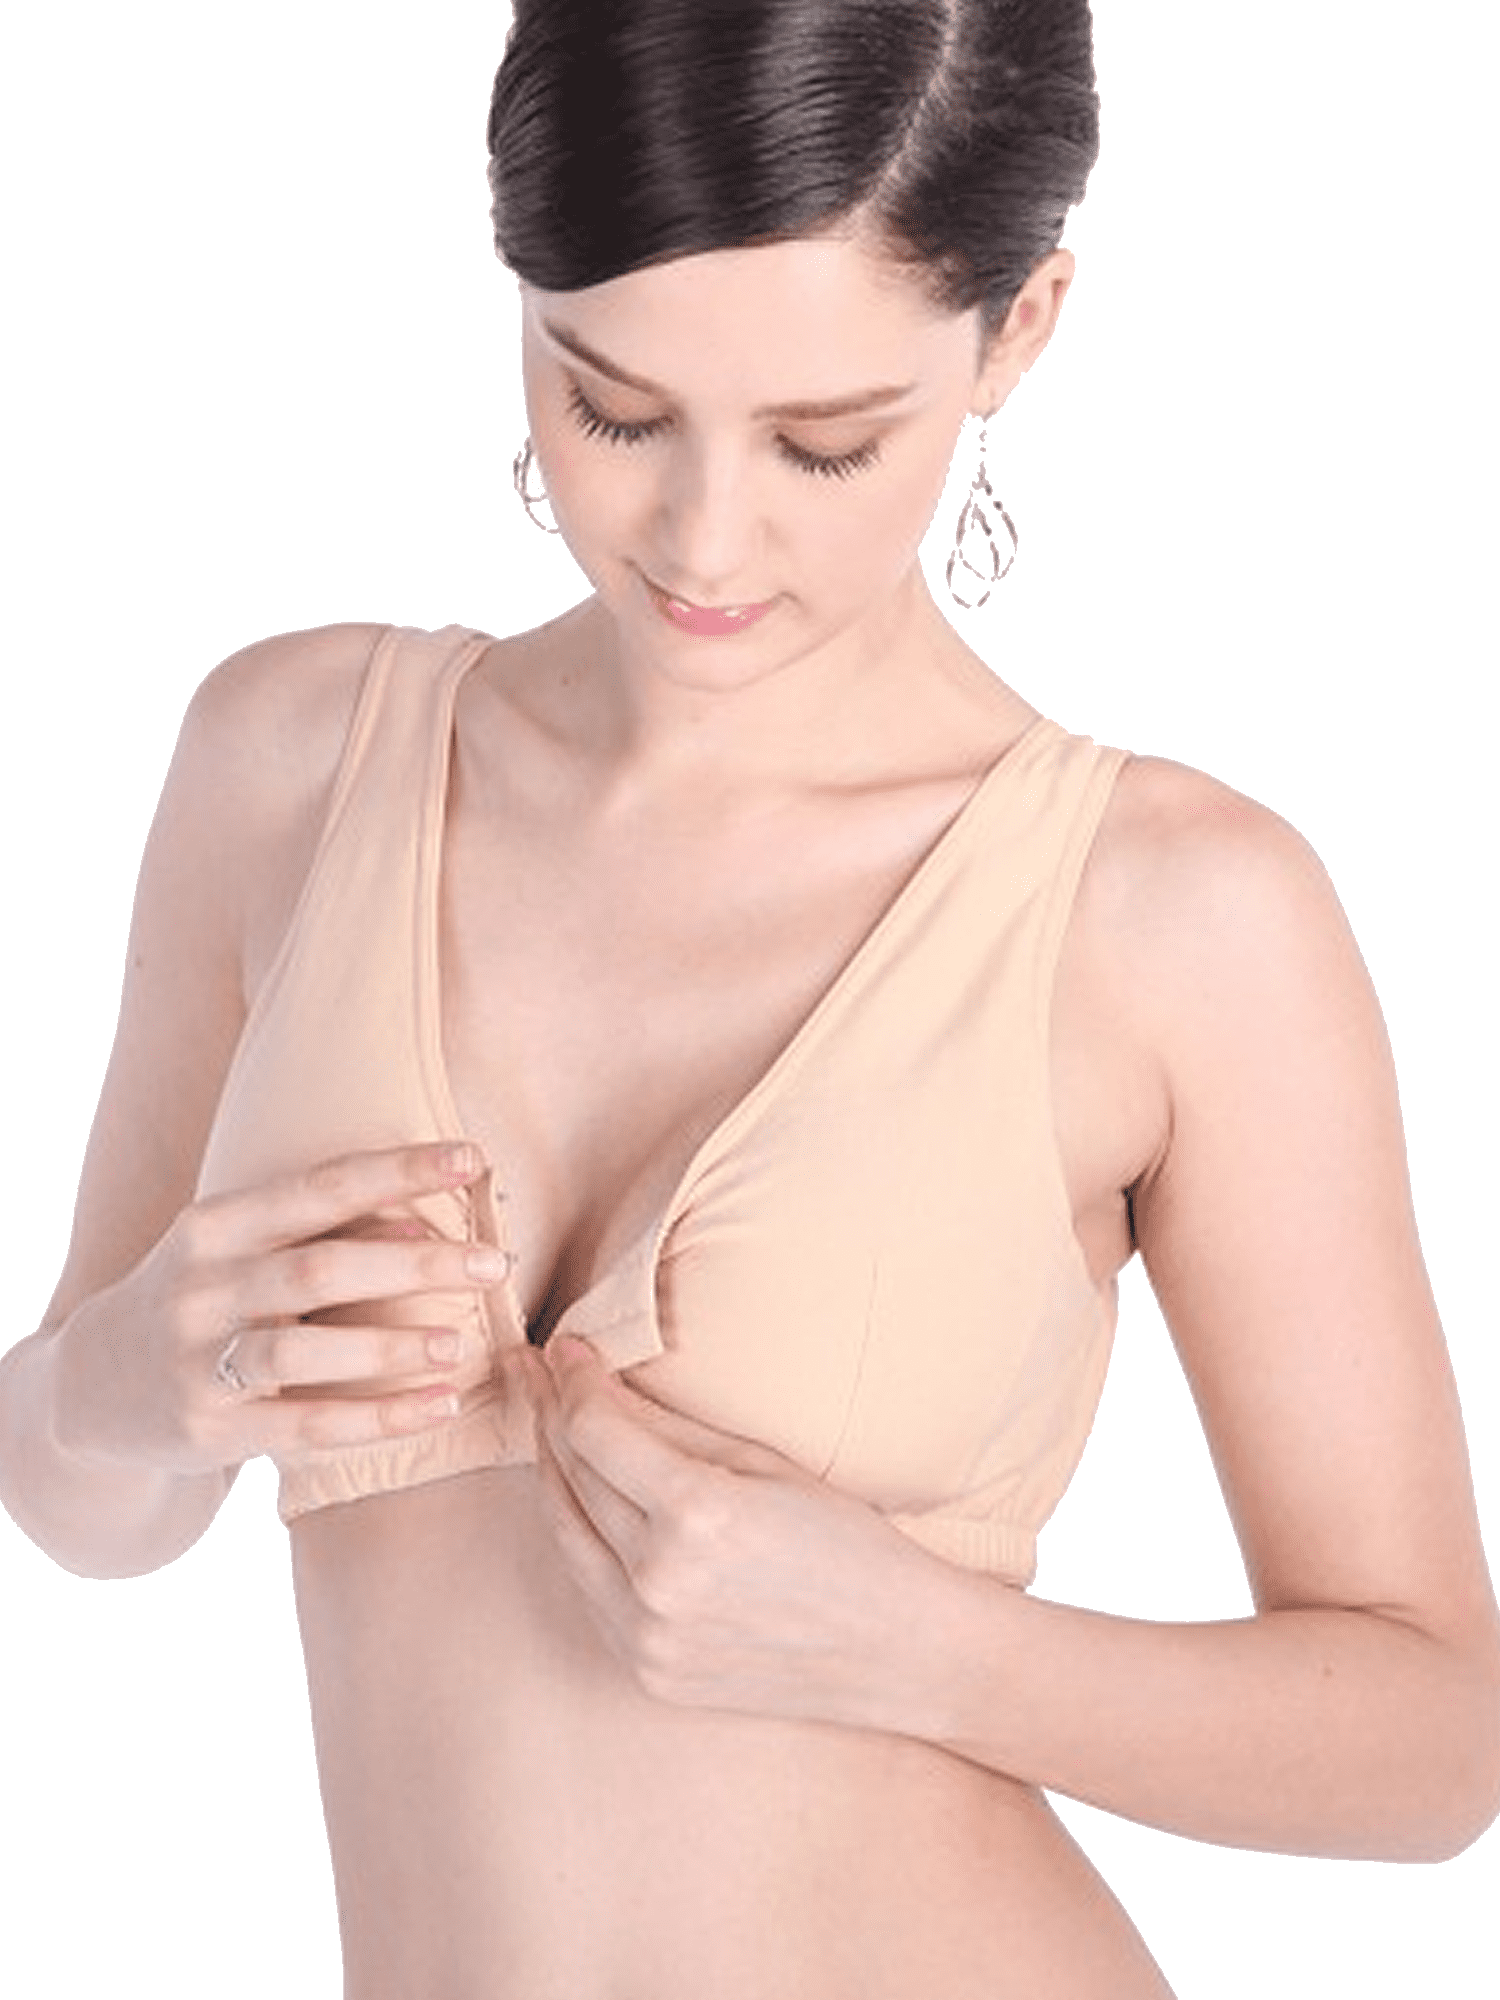 BIMEI Front-Closure Mastectomy Bra Pocket Bra for Silicone Breast forms  8405,Black,34C 